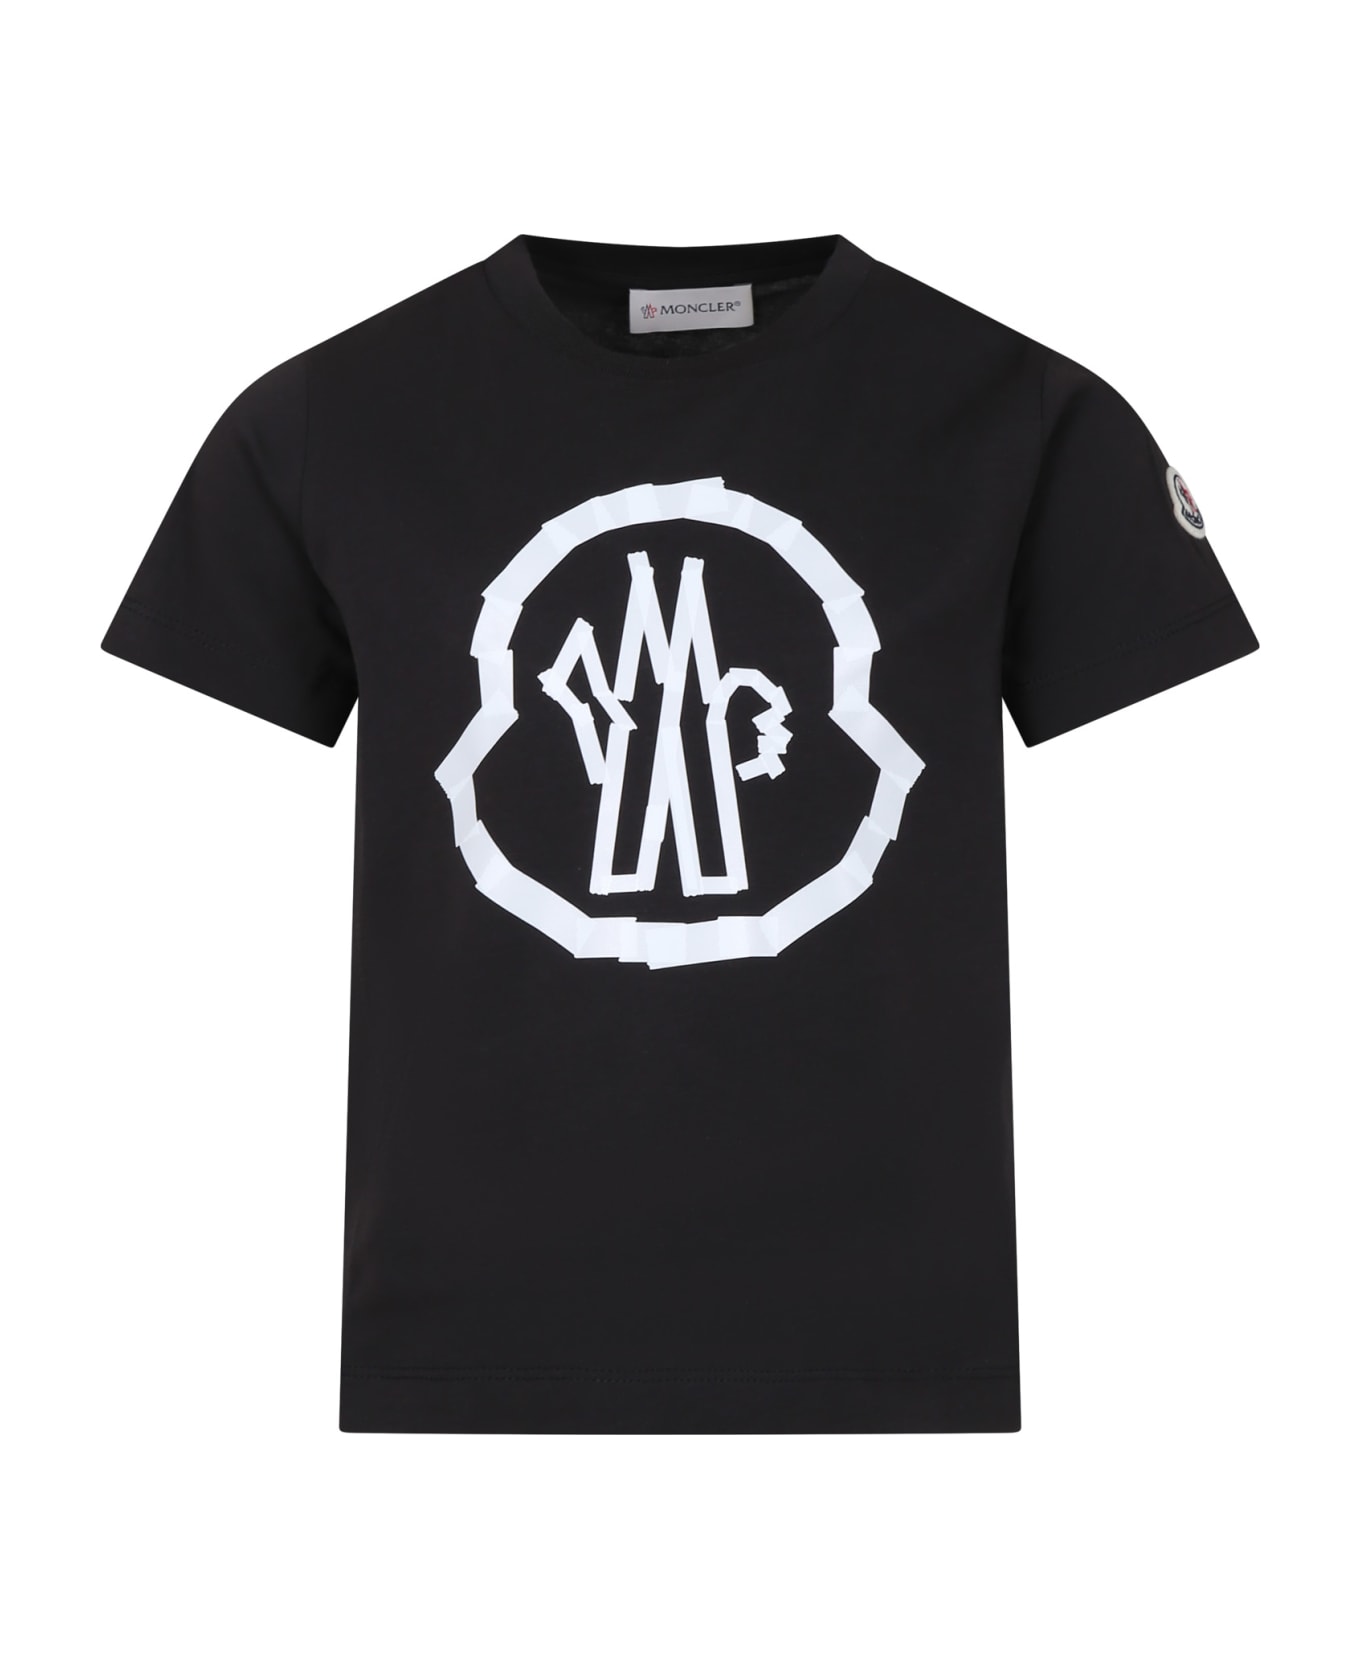 Moncler Black T-shirt For Boy With Logo - Black